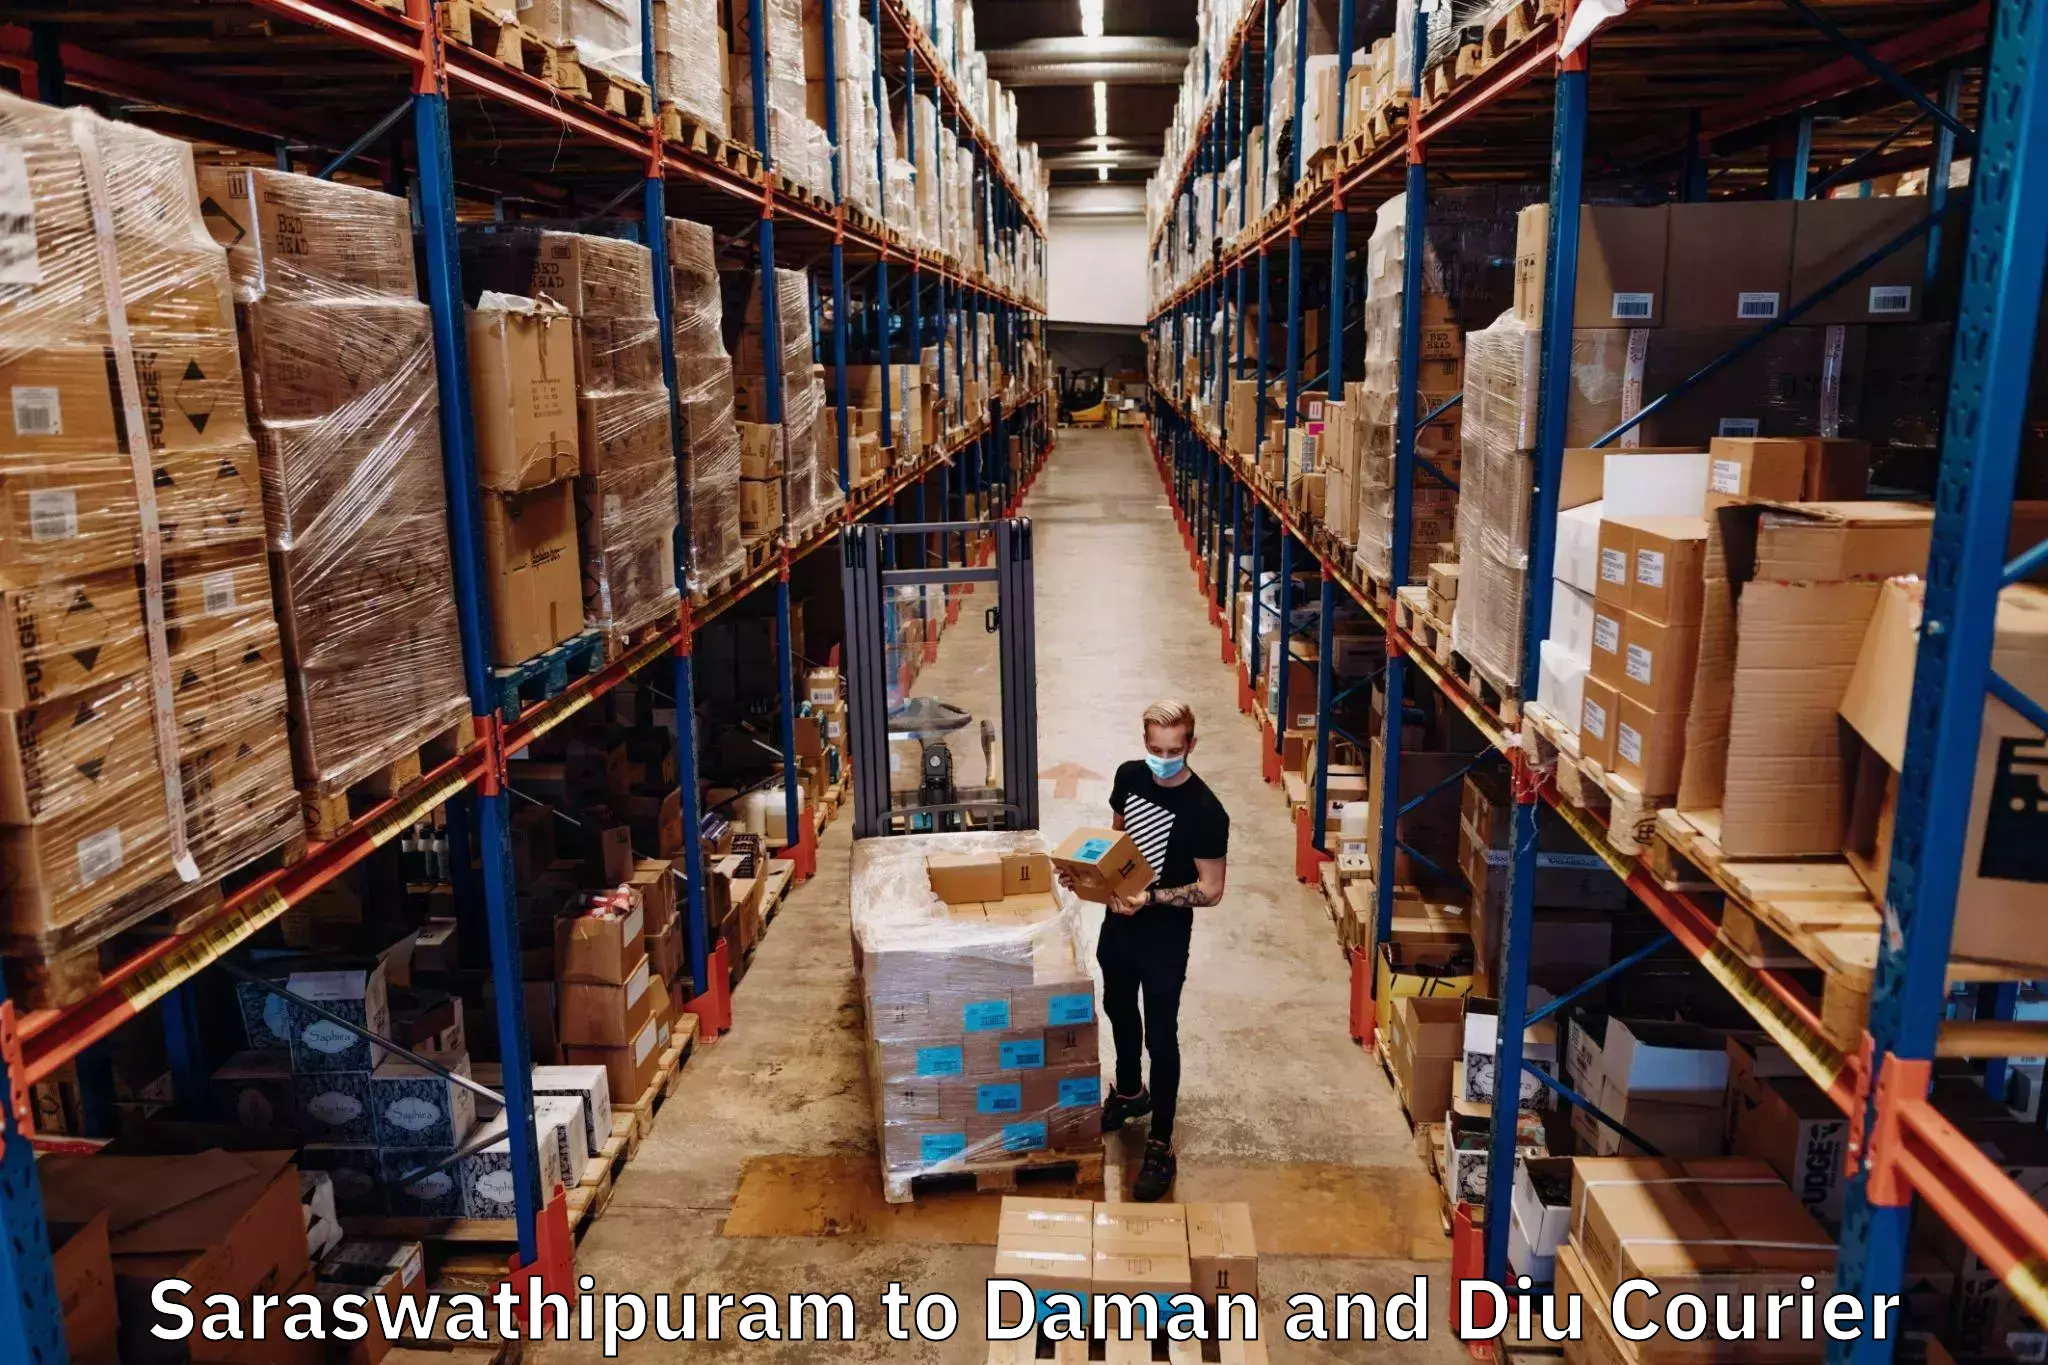 Cash on delivery service Saraswathipuram to Diu